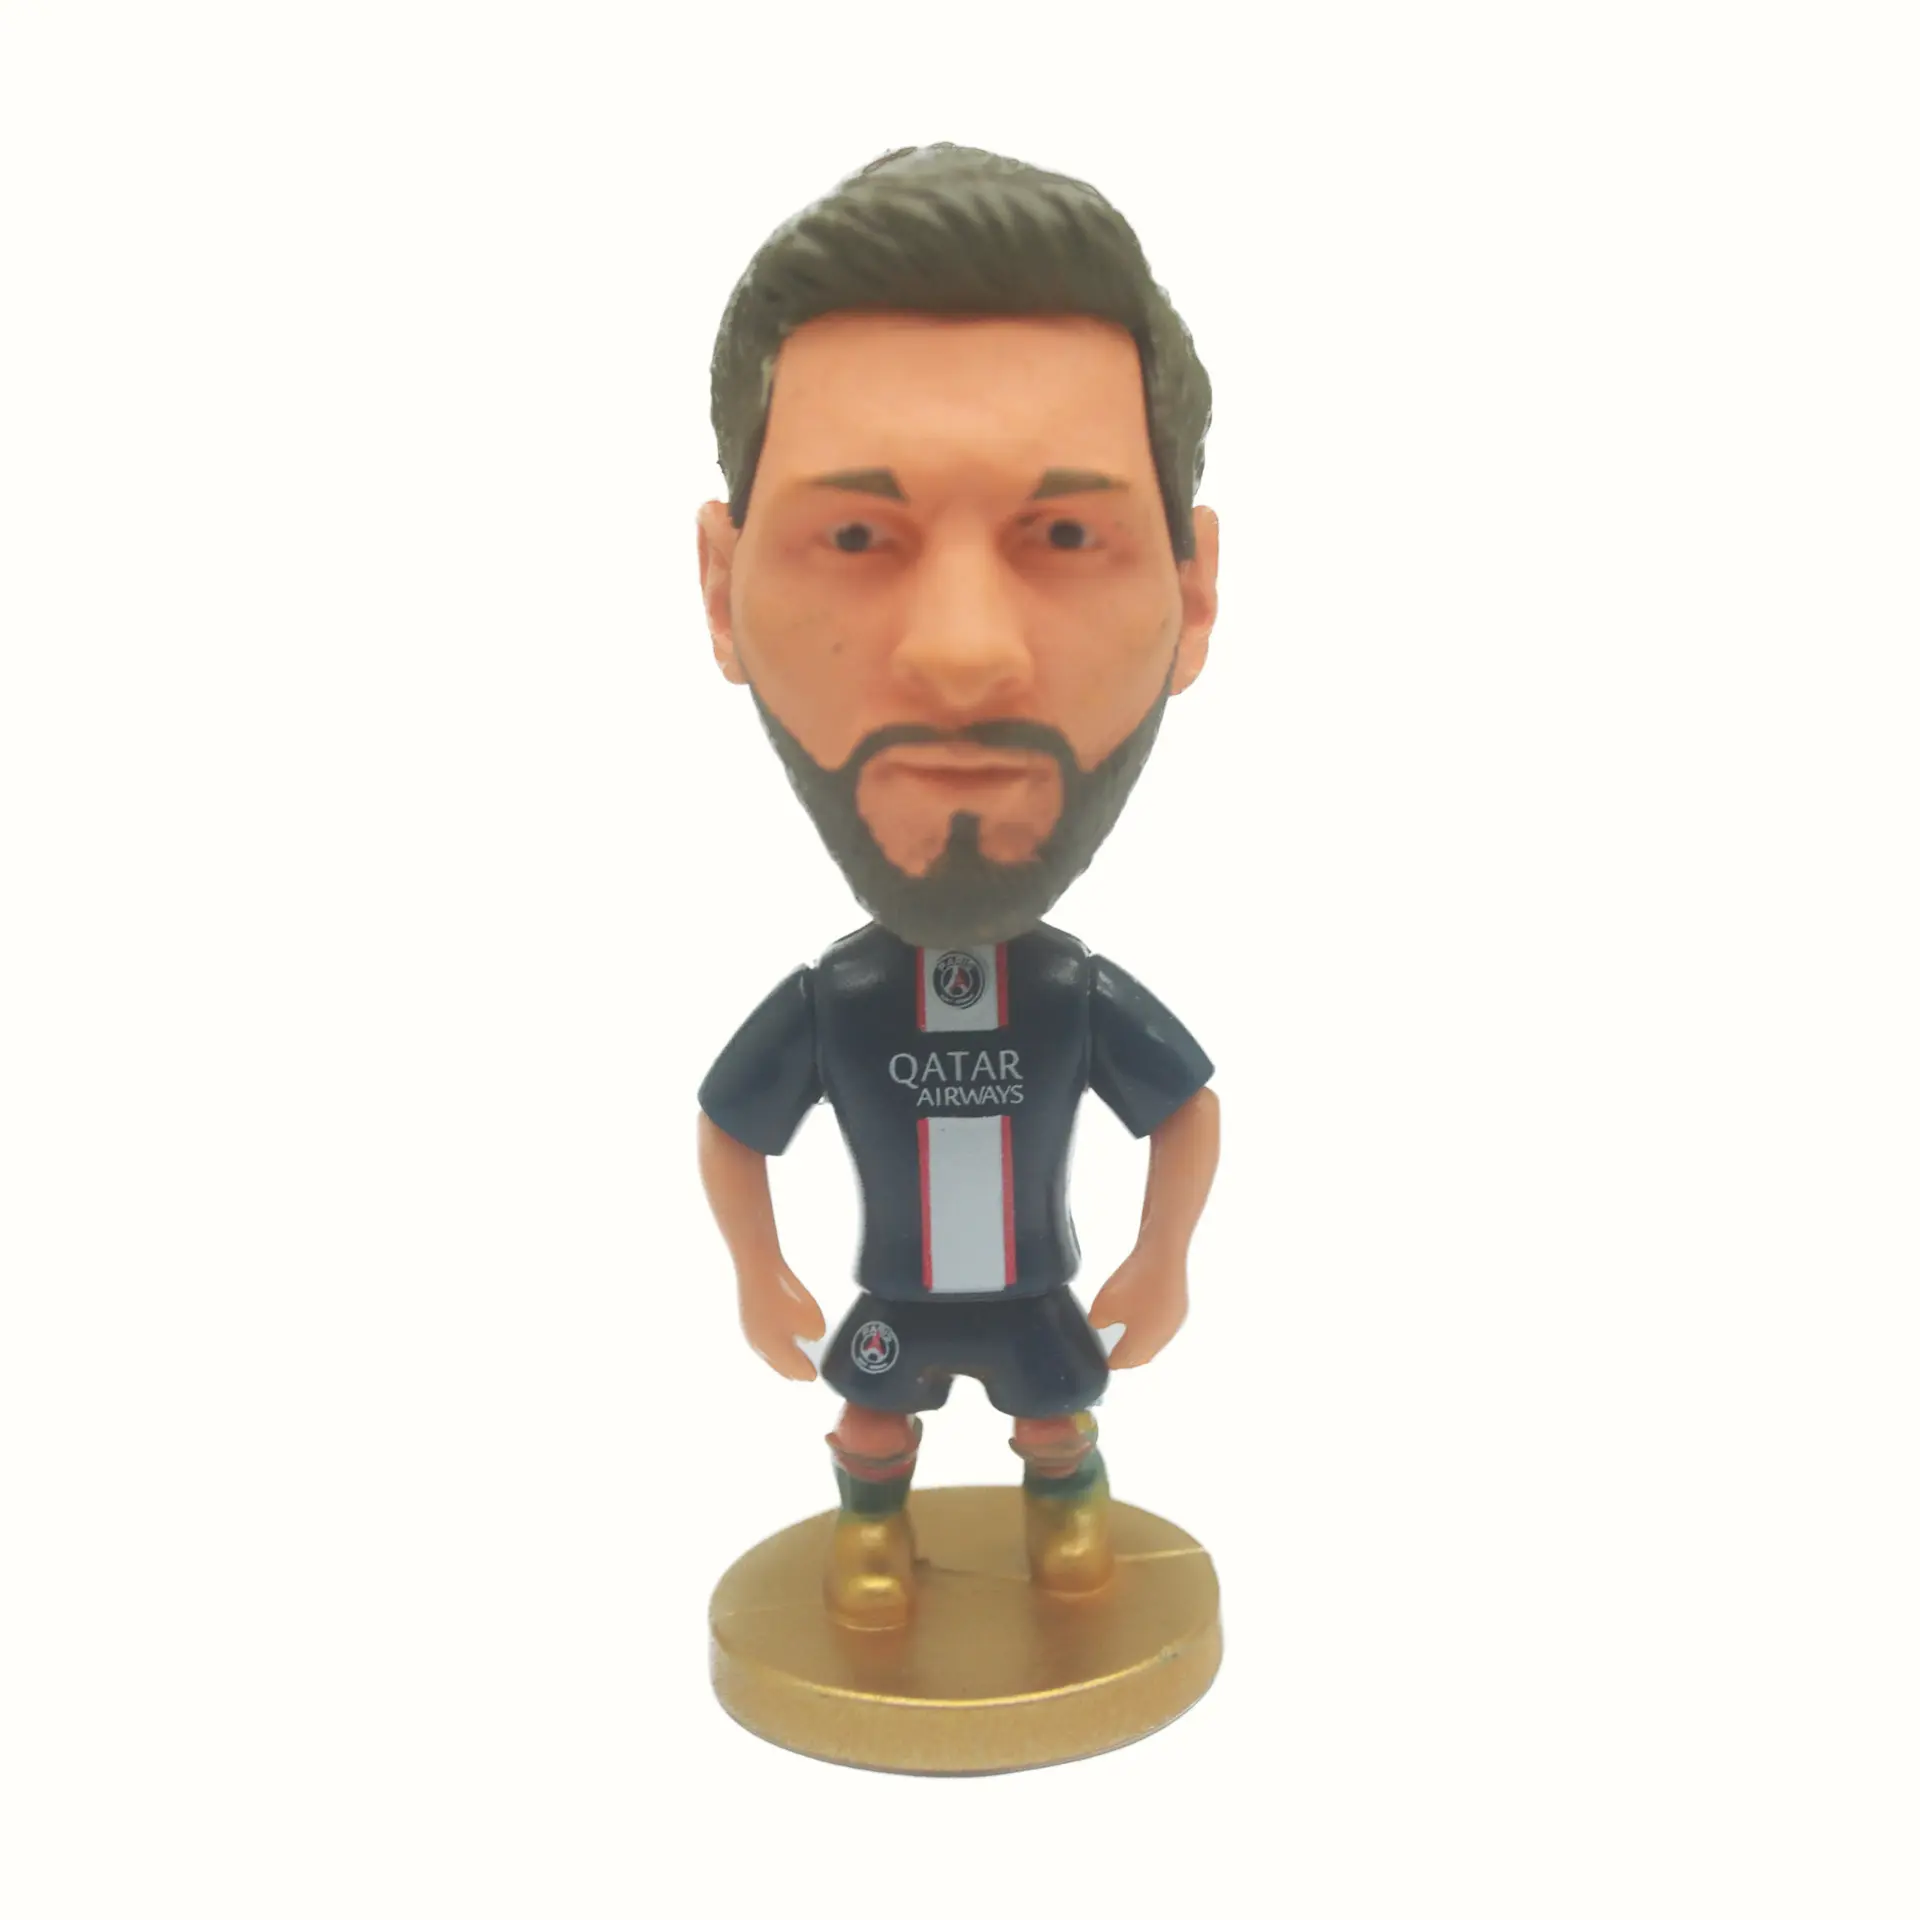 Dihua Make Custom Football Action Figure Mini Plastic Sports Figure Football Players Figure Toy